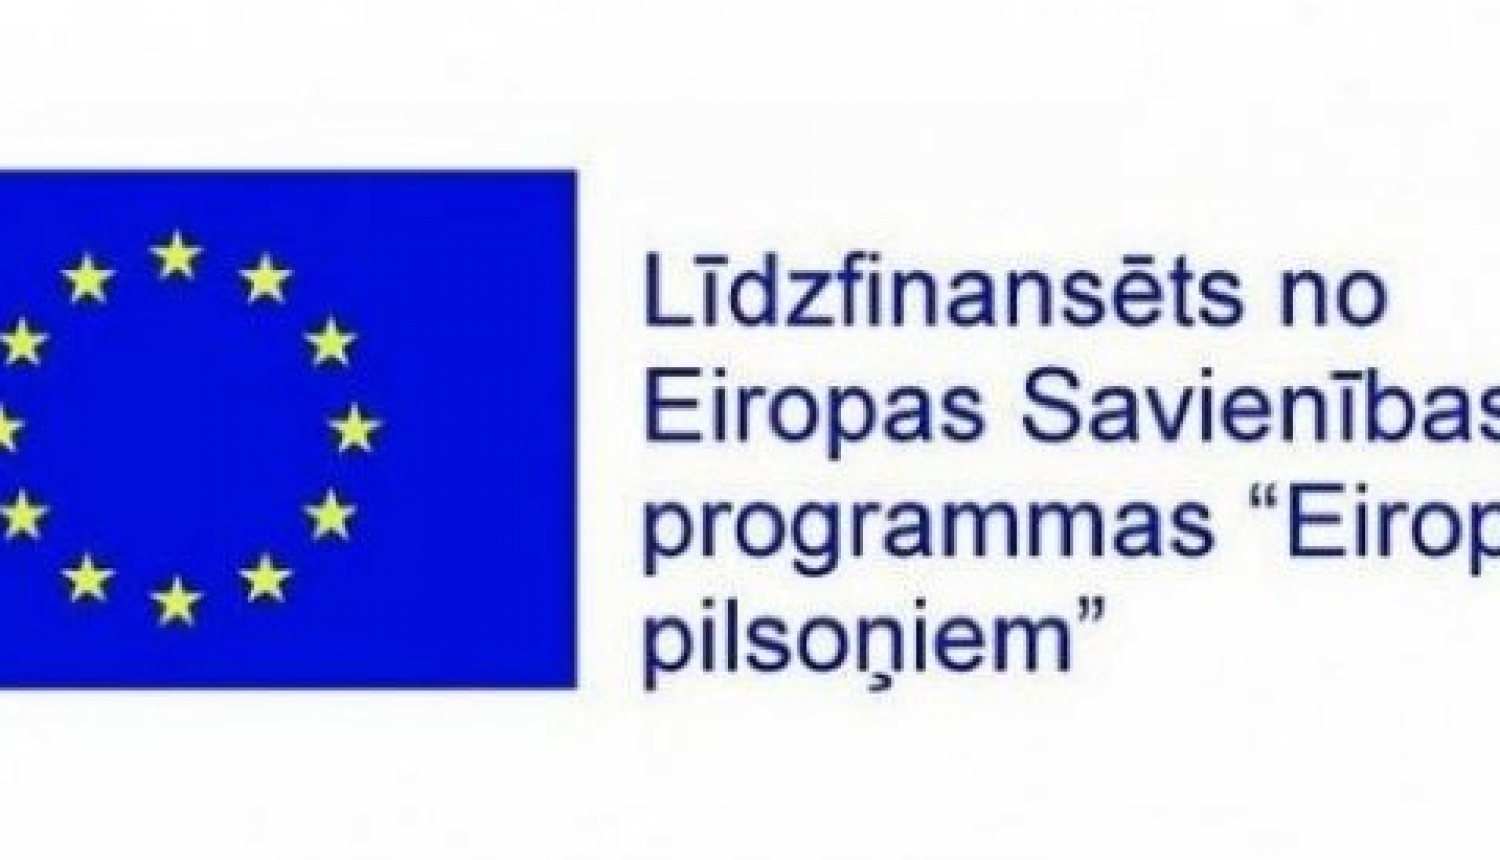 ES programma “Eiropa pilsoņiem”